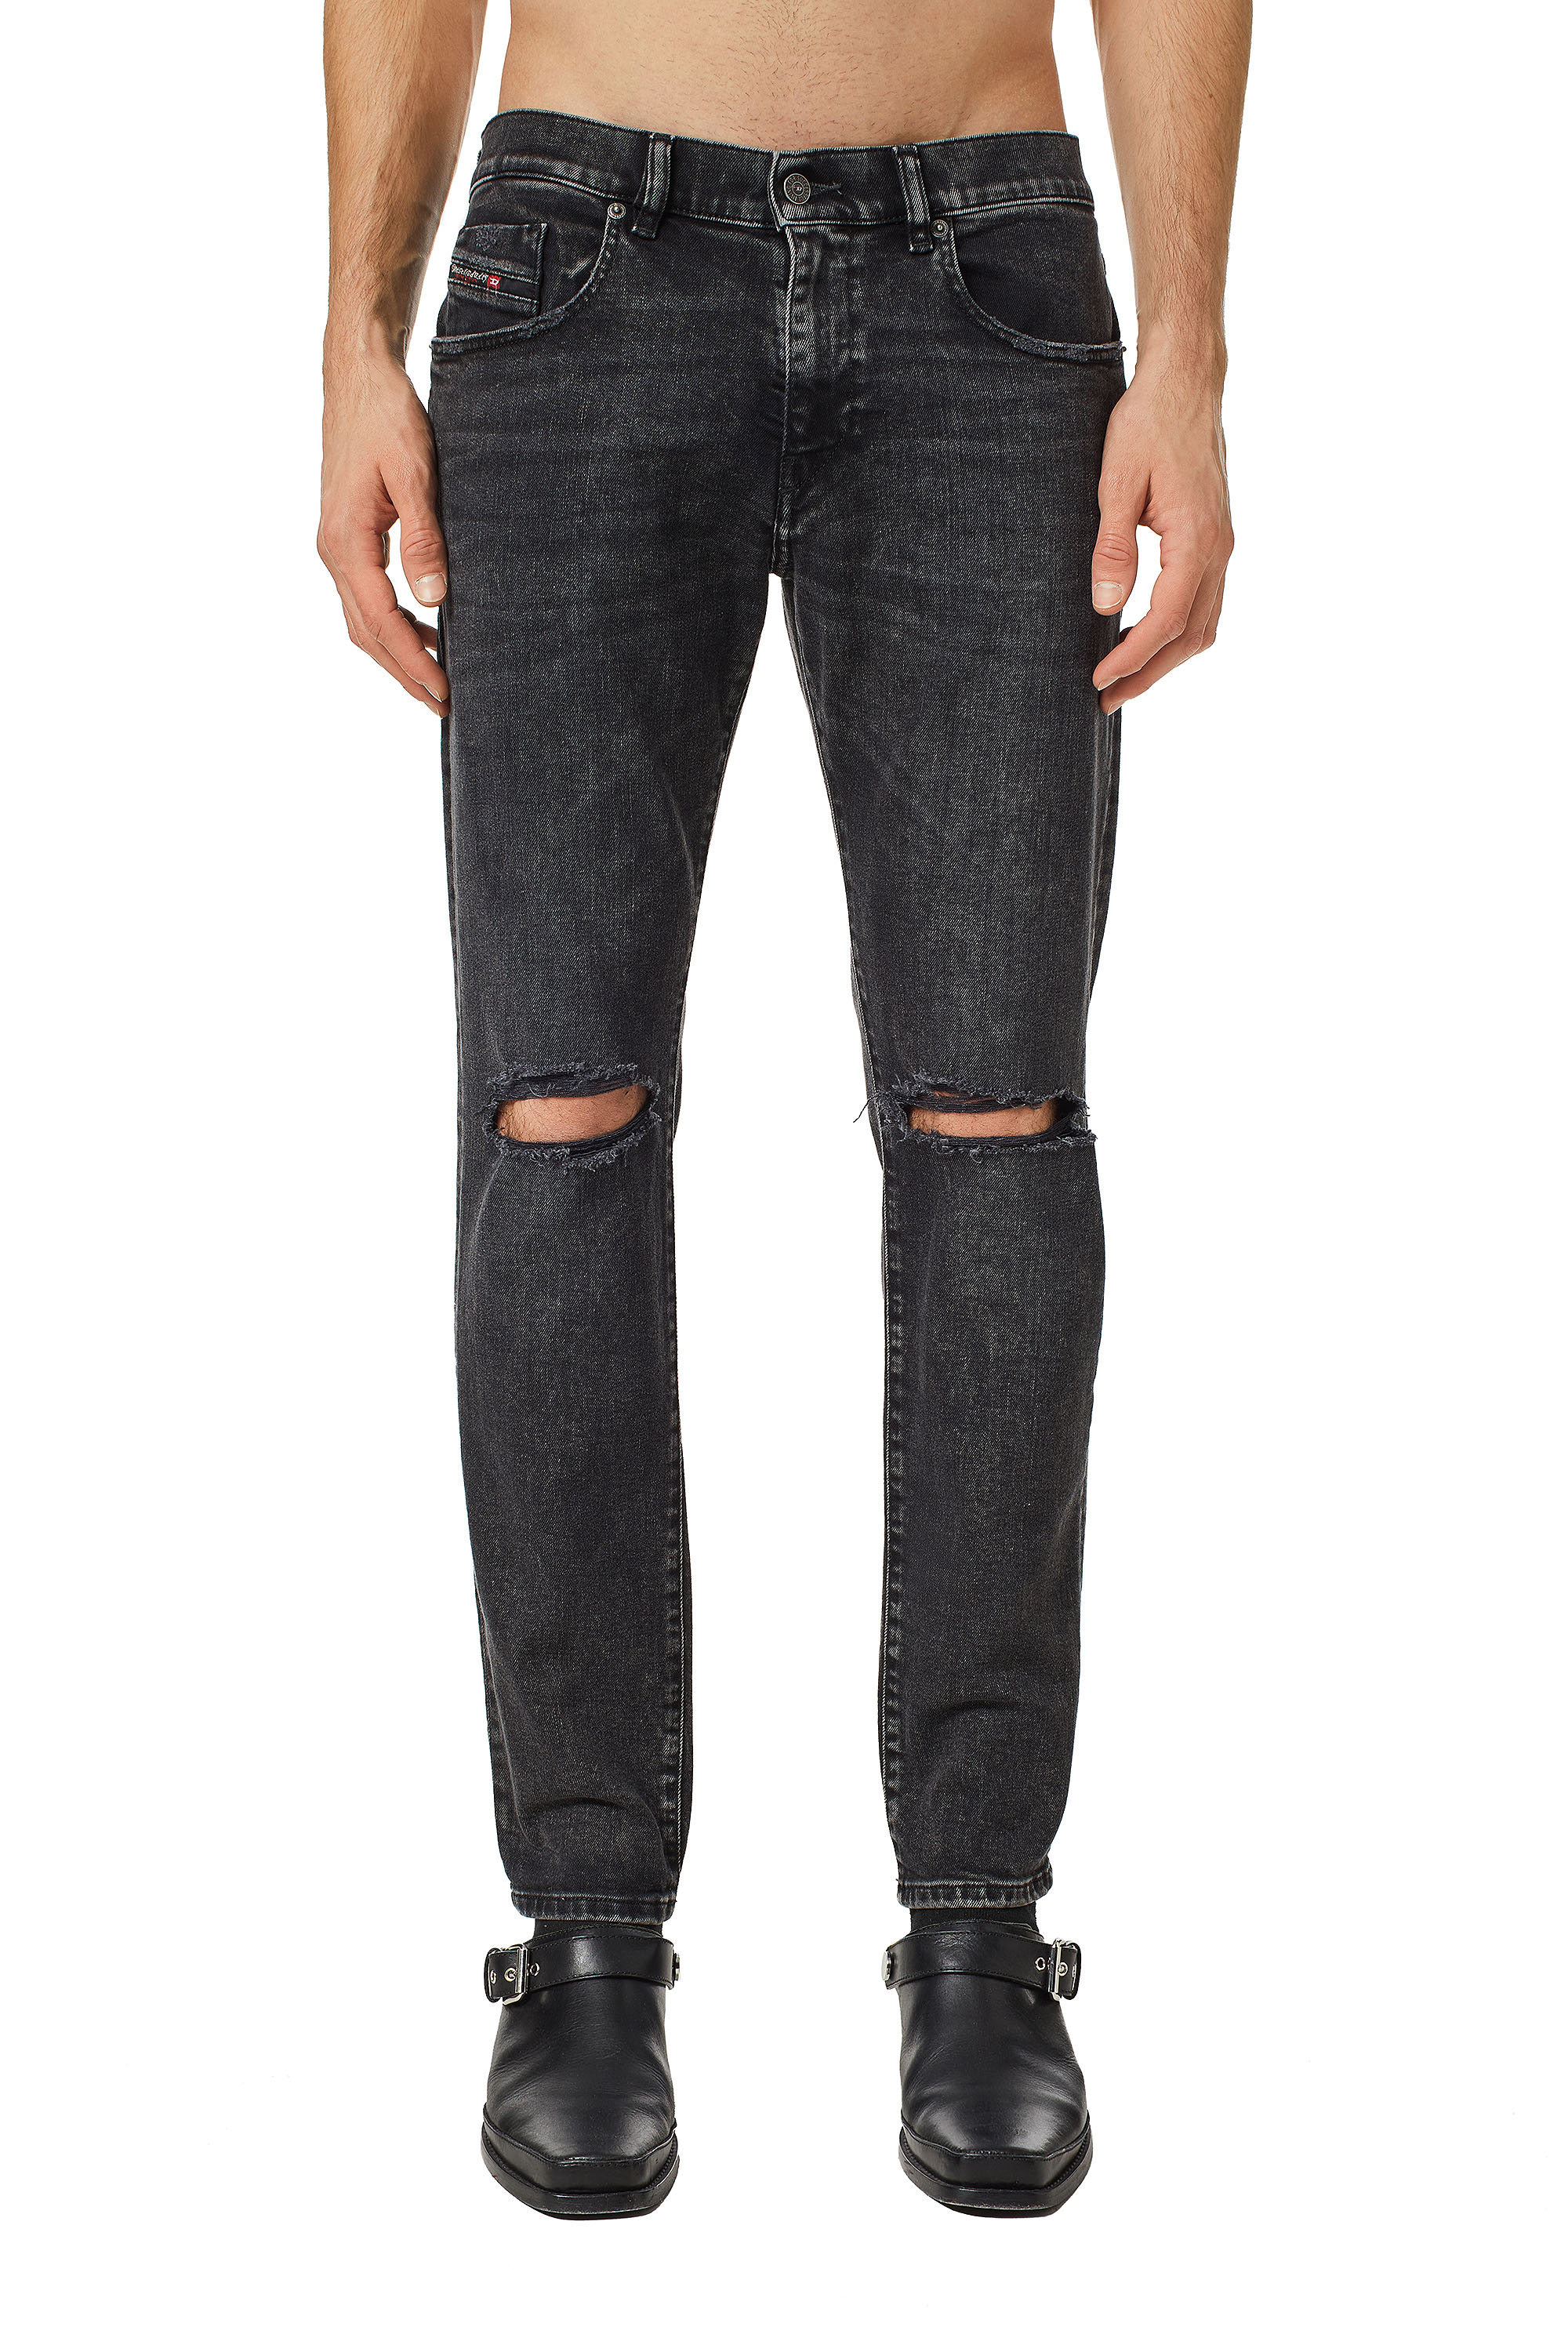 2019 D-STRUKT 09D19 Slim Jeans, Black/Dark grey - Jeans